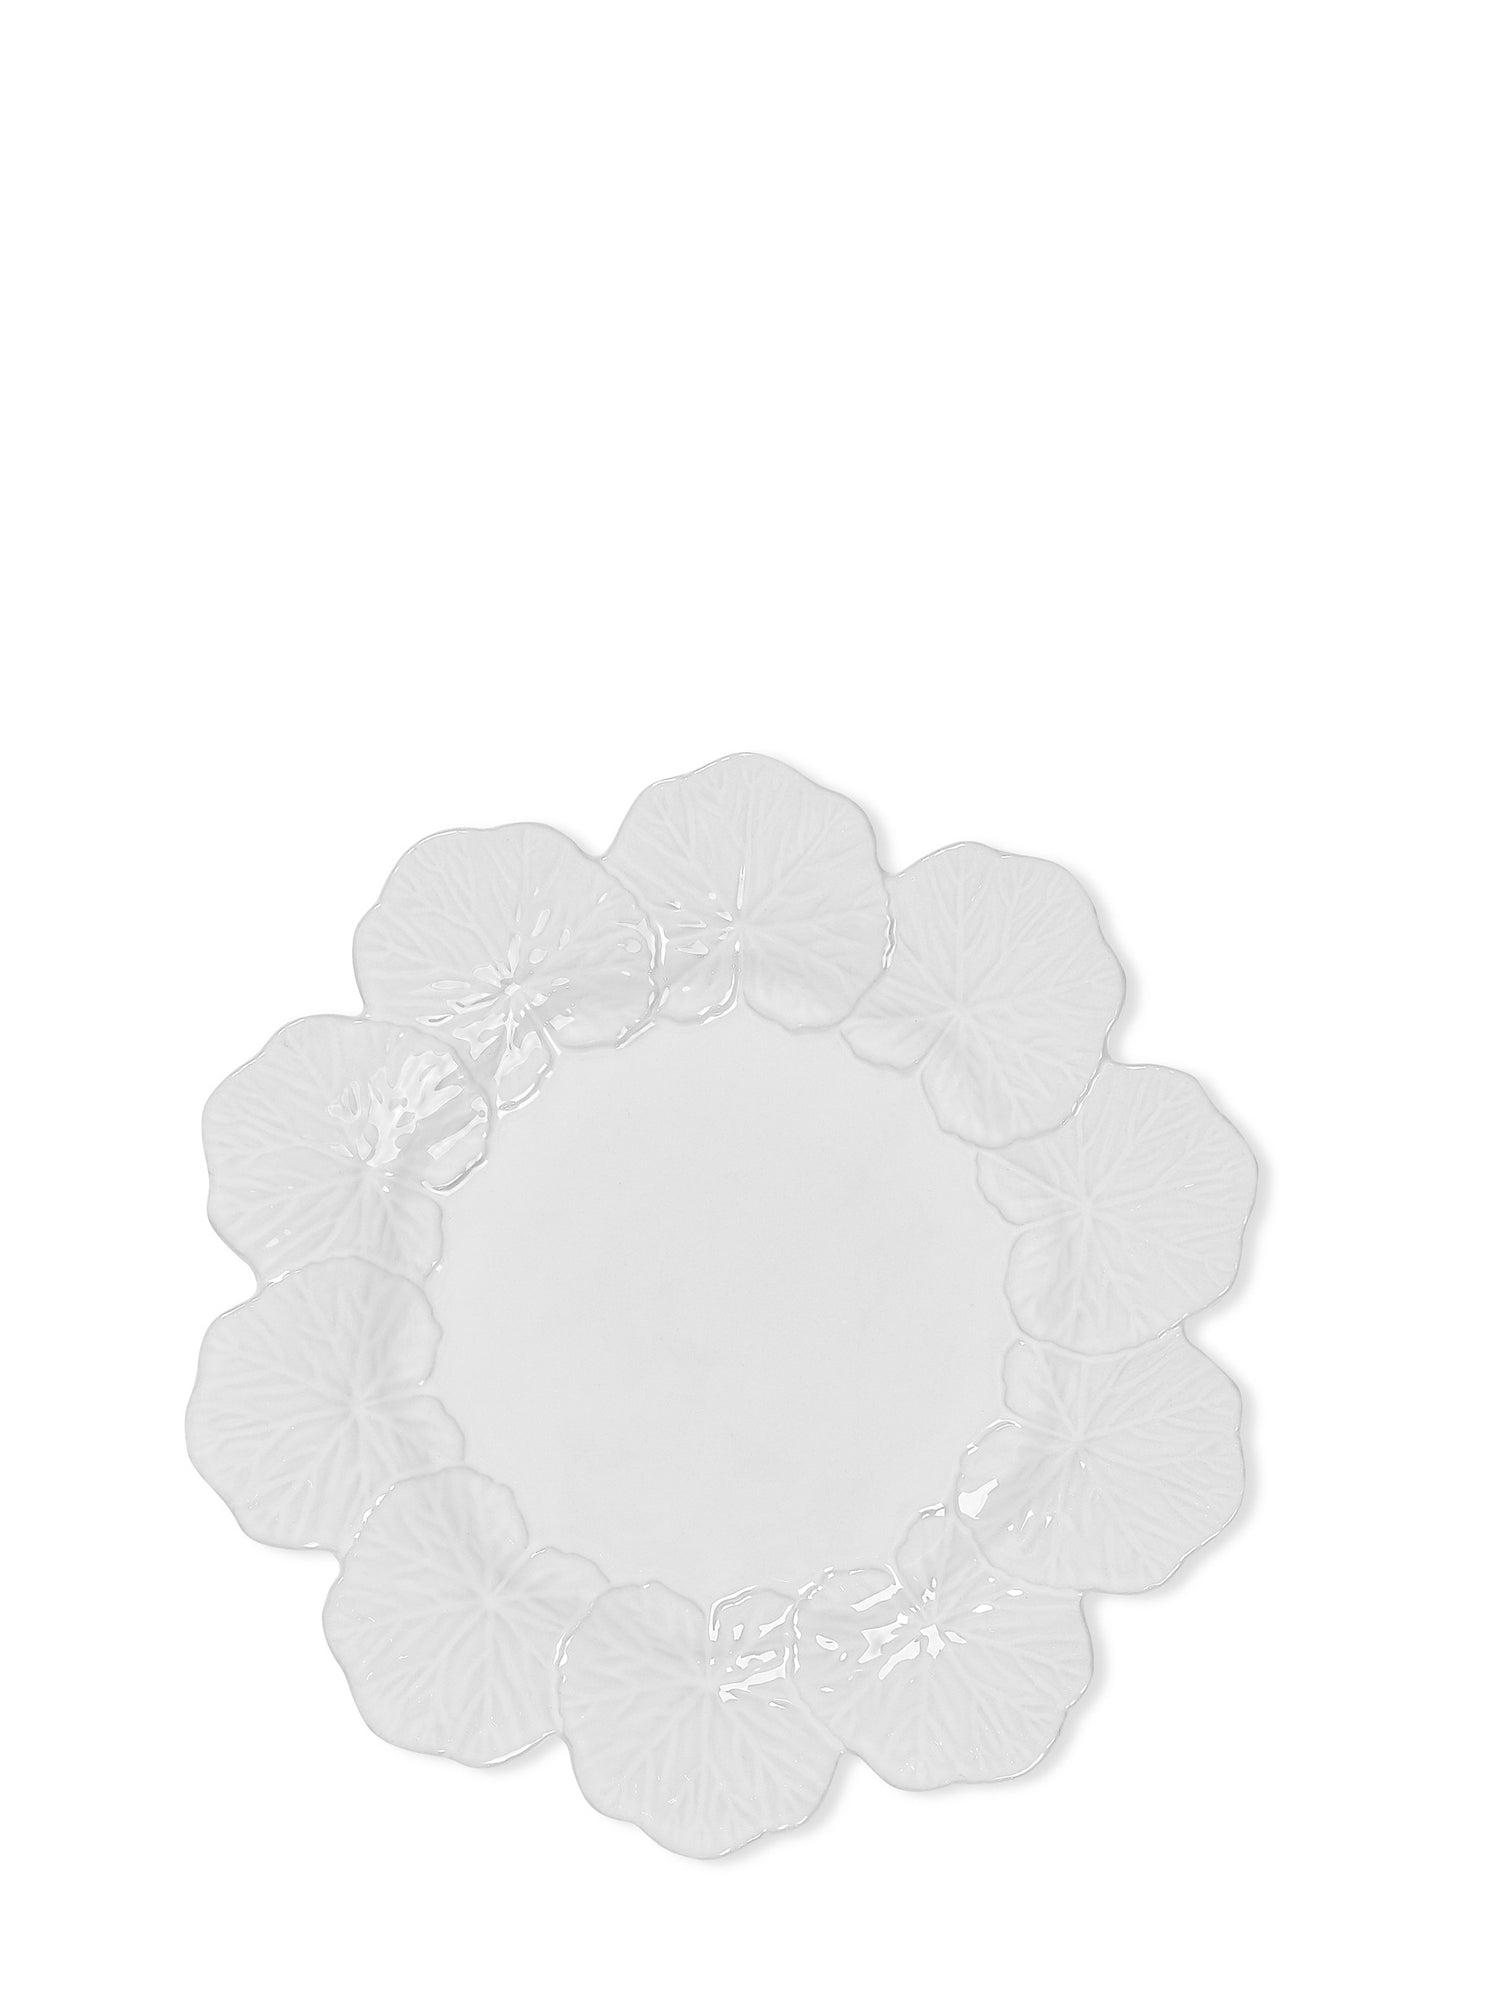 Dinner Plate, White - Geranium